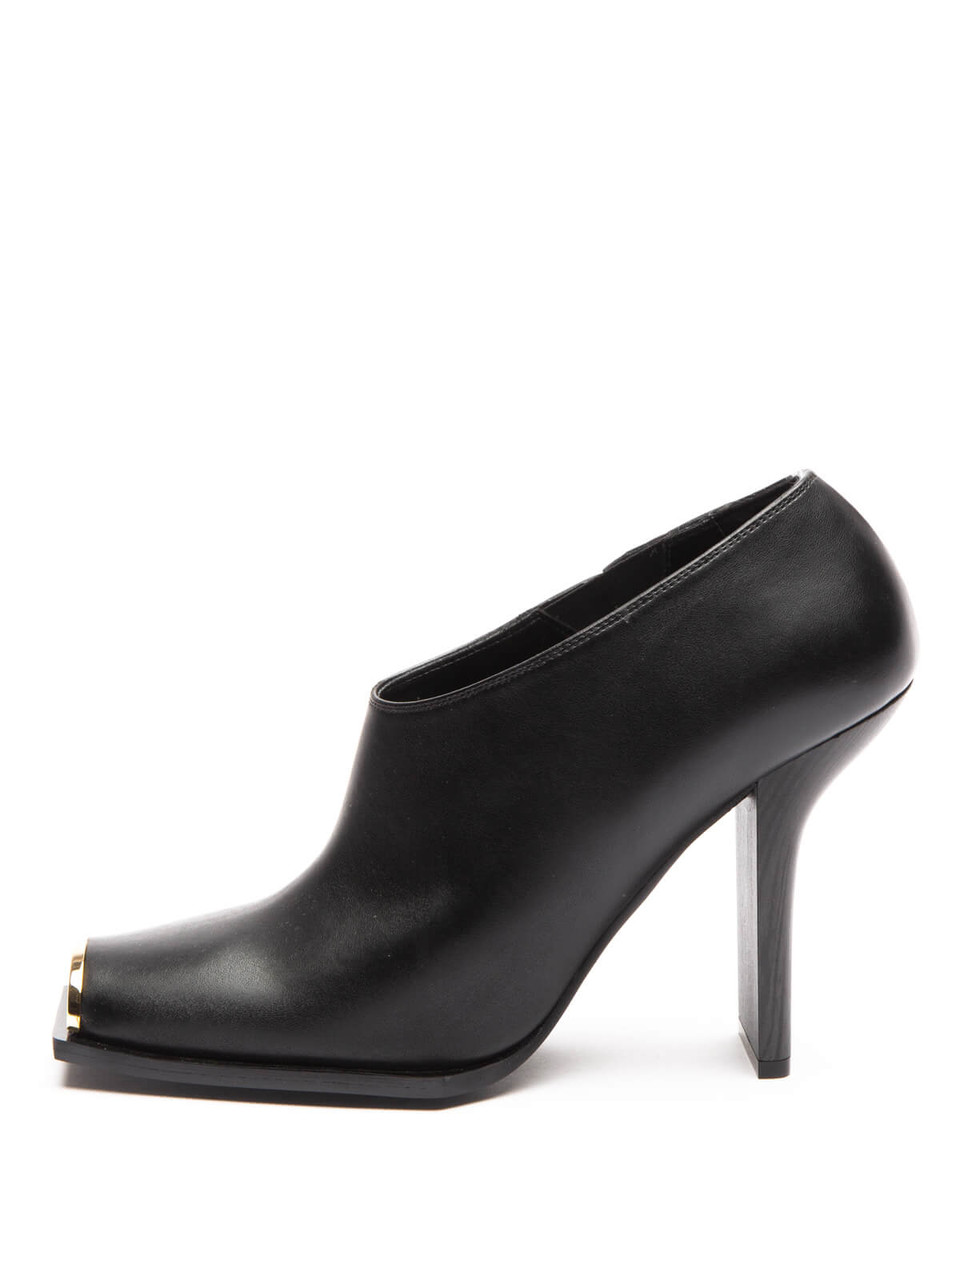 Stella McCartney Women's Faux Vegan Leather Square Toe Heels Boots, Size 6.5 UK, Black